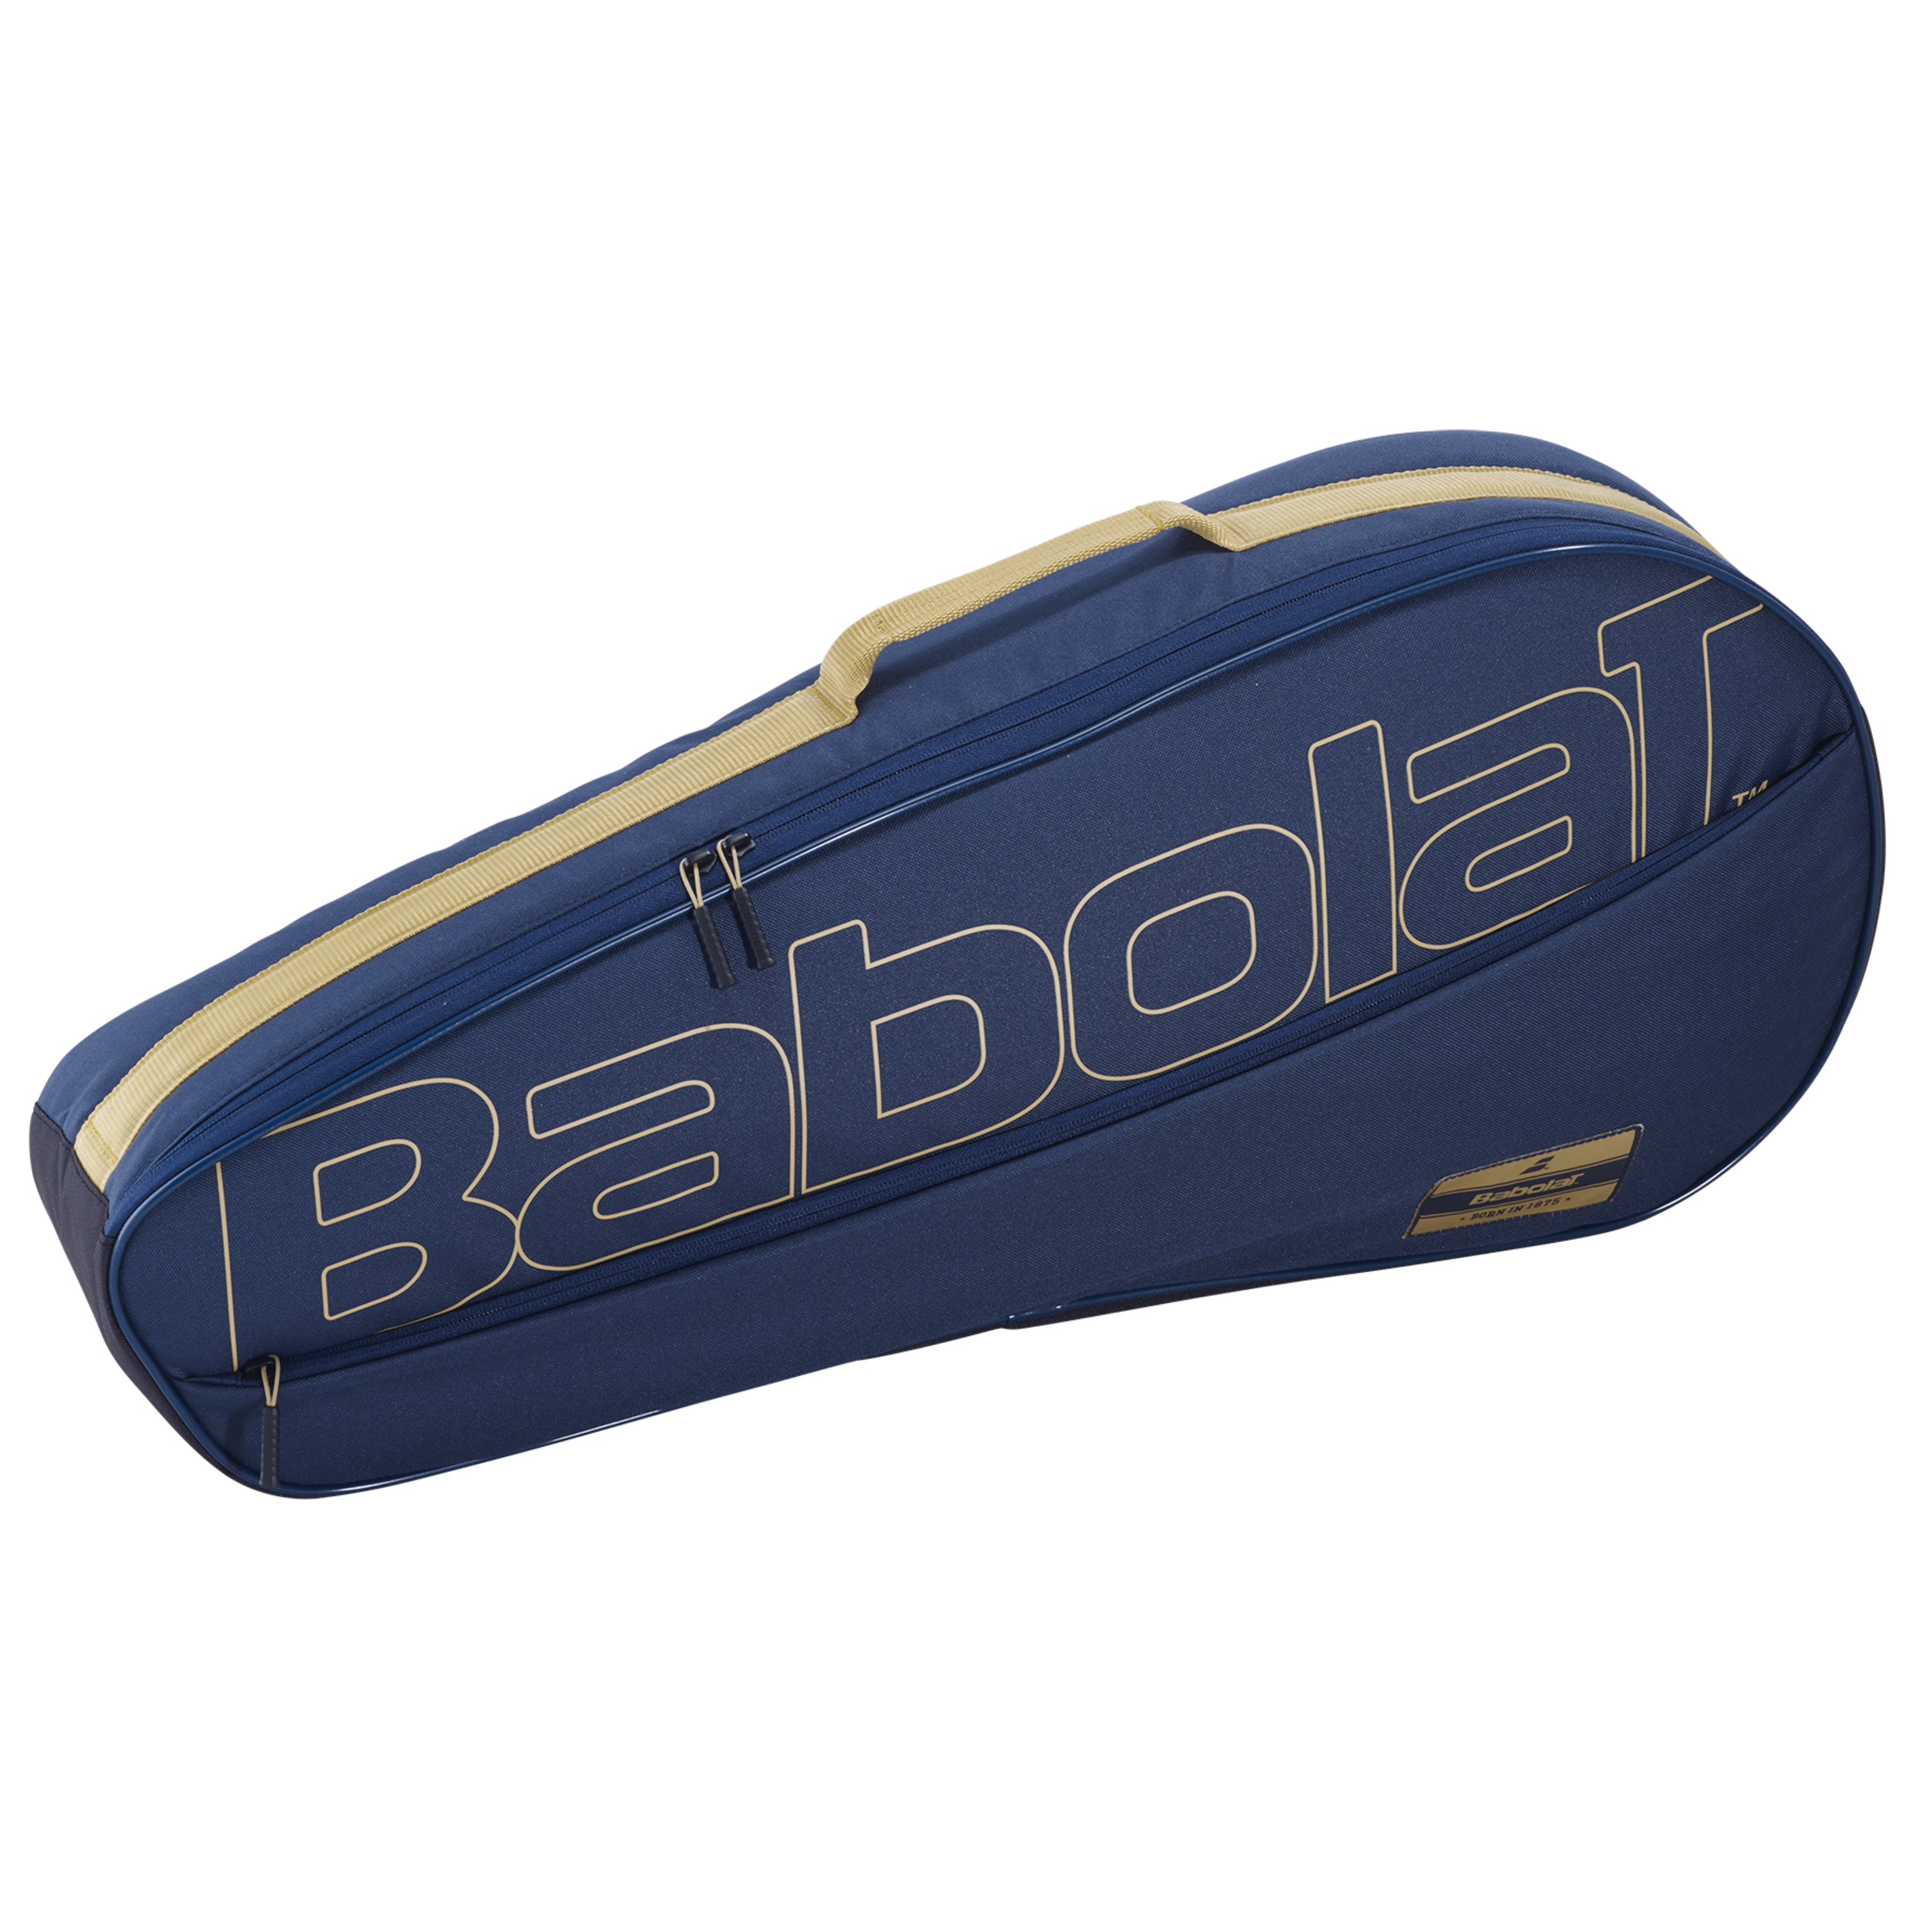 Babolat 3-Racket Bag Racket Holder RH3 Essential Black/Yellow 74 x 12 x 30 cm 